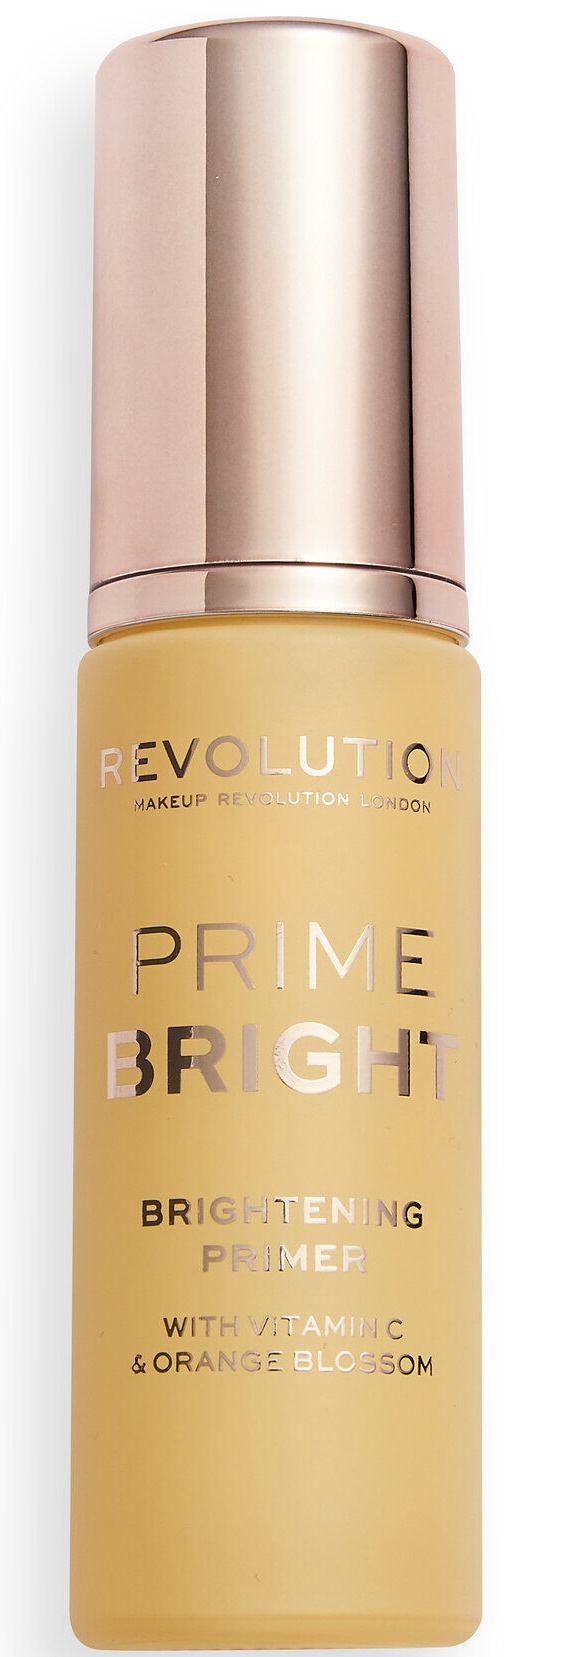 Revolution Prime Bright Brightening Primer